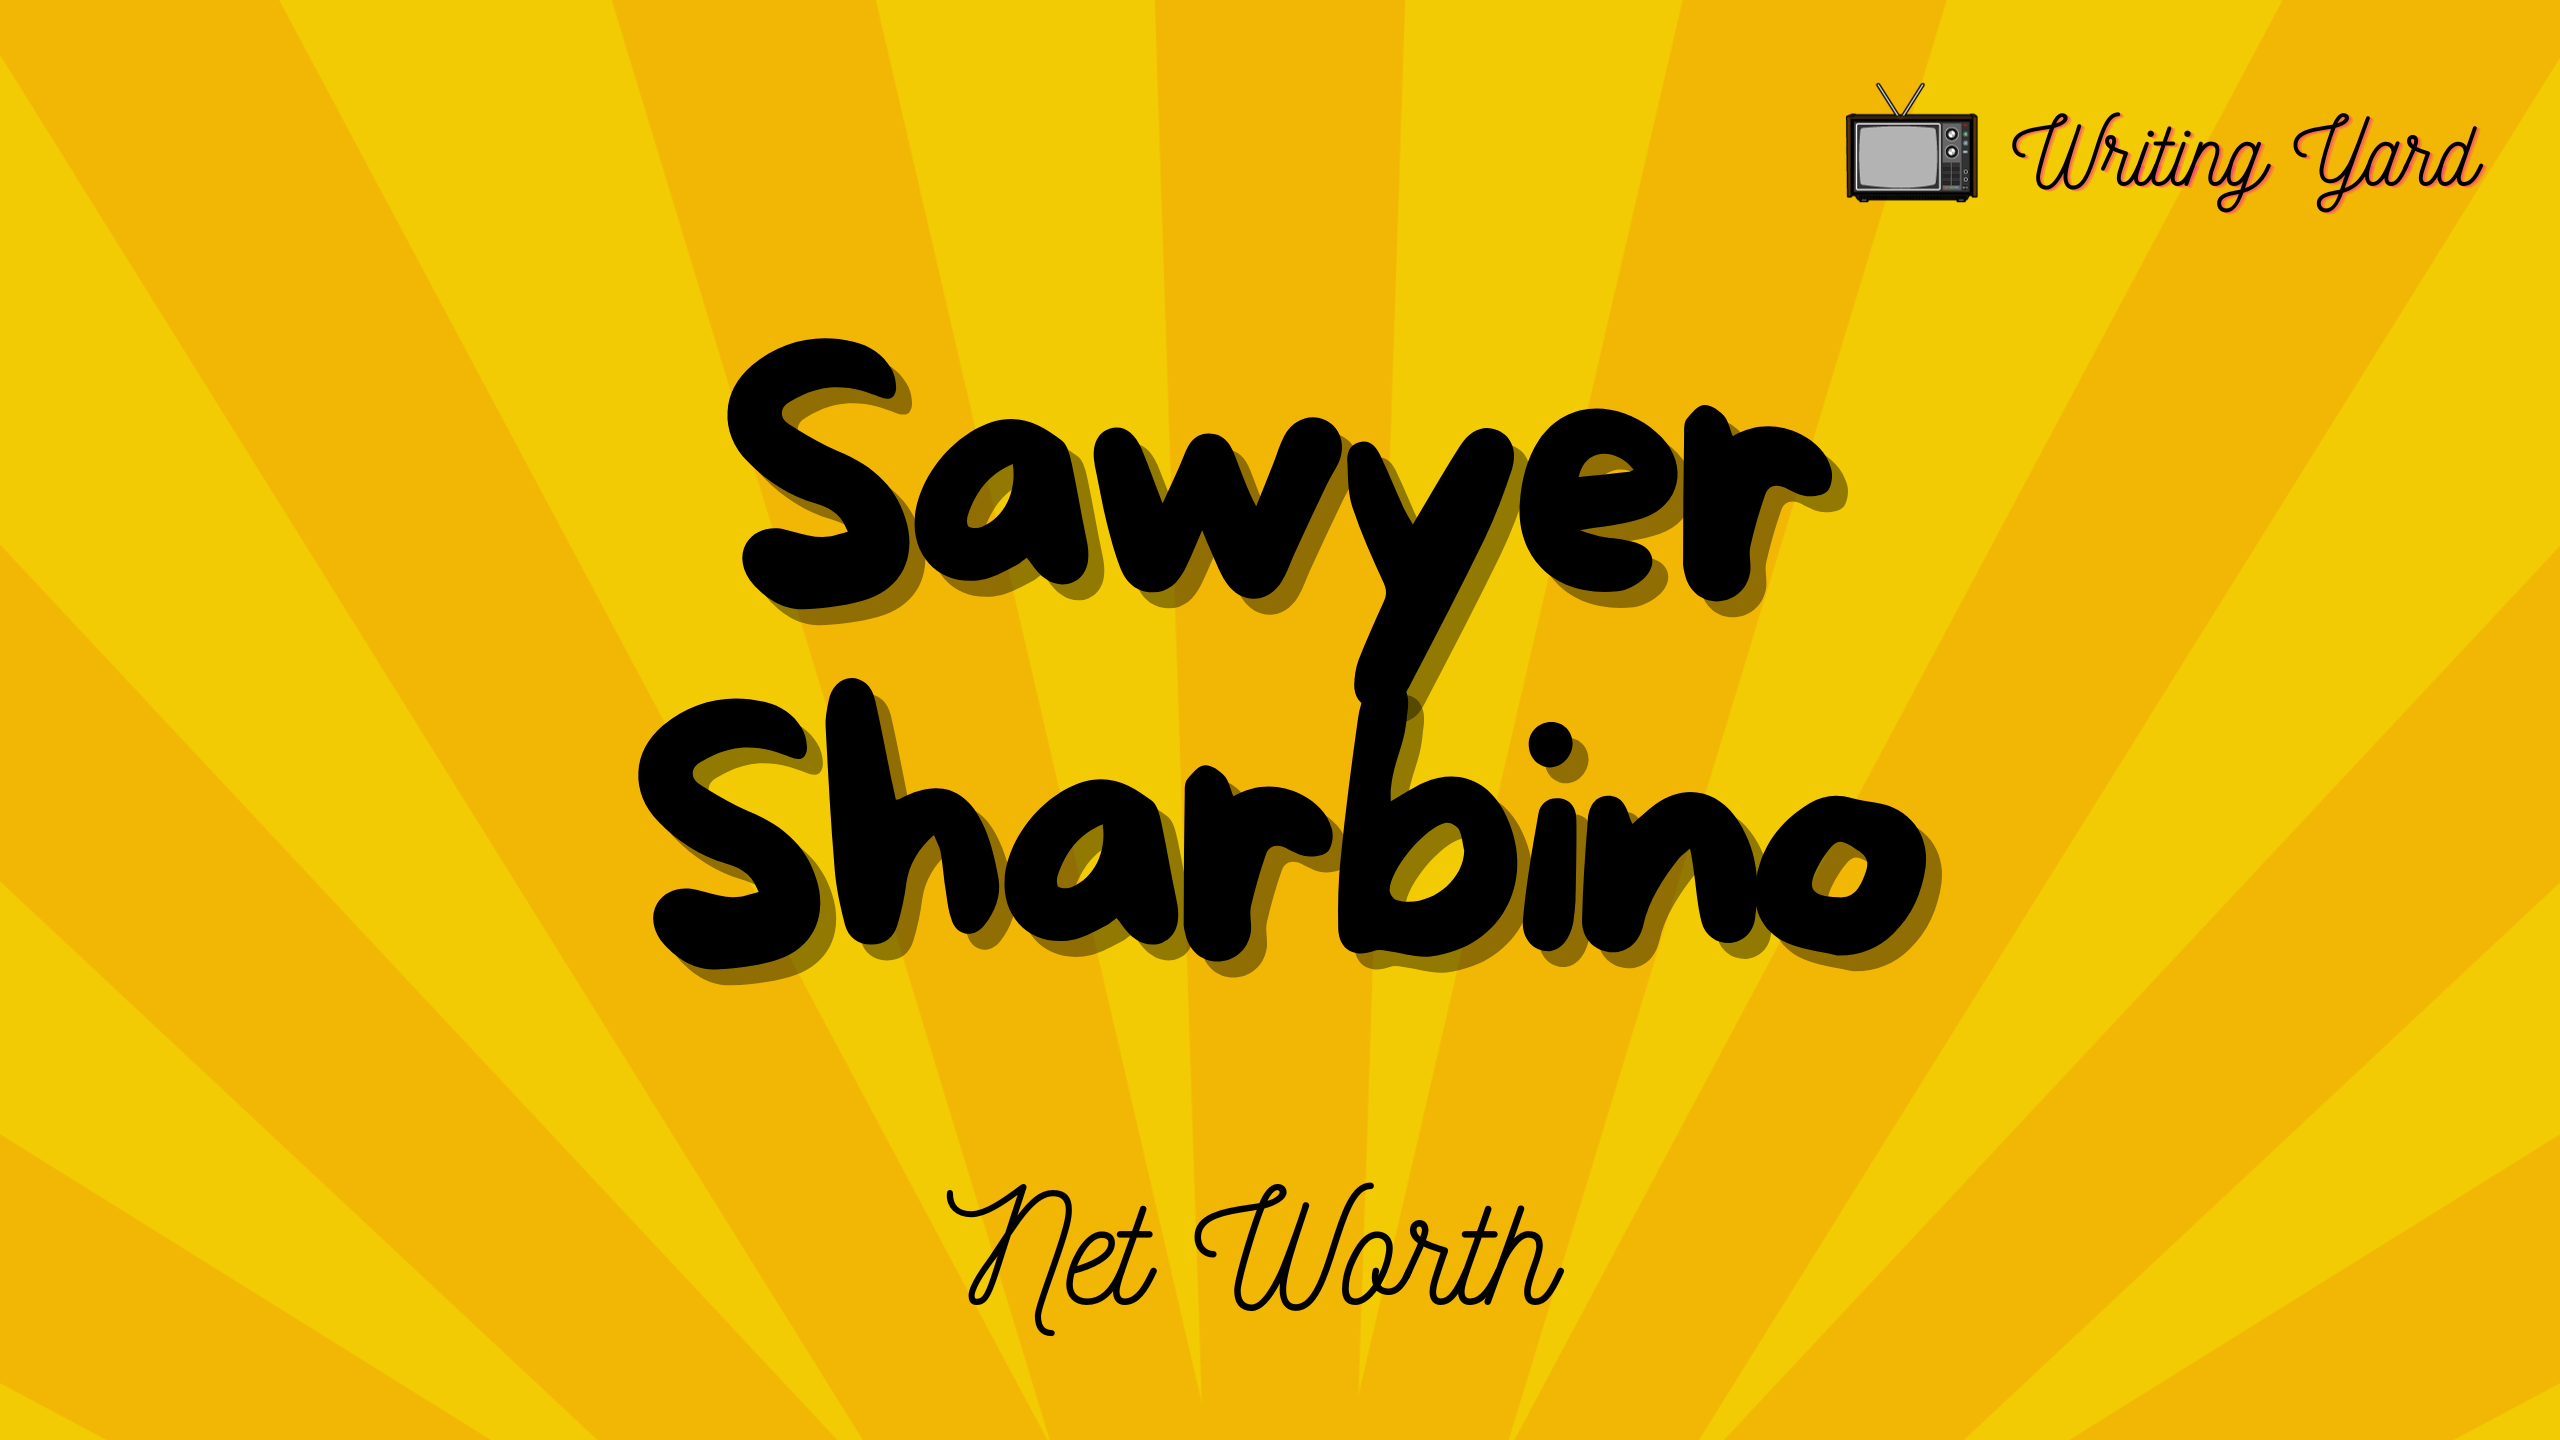 Sawyer Sharbino Net Worth